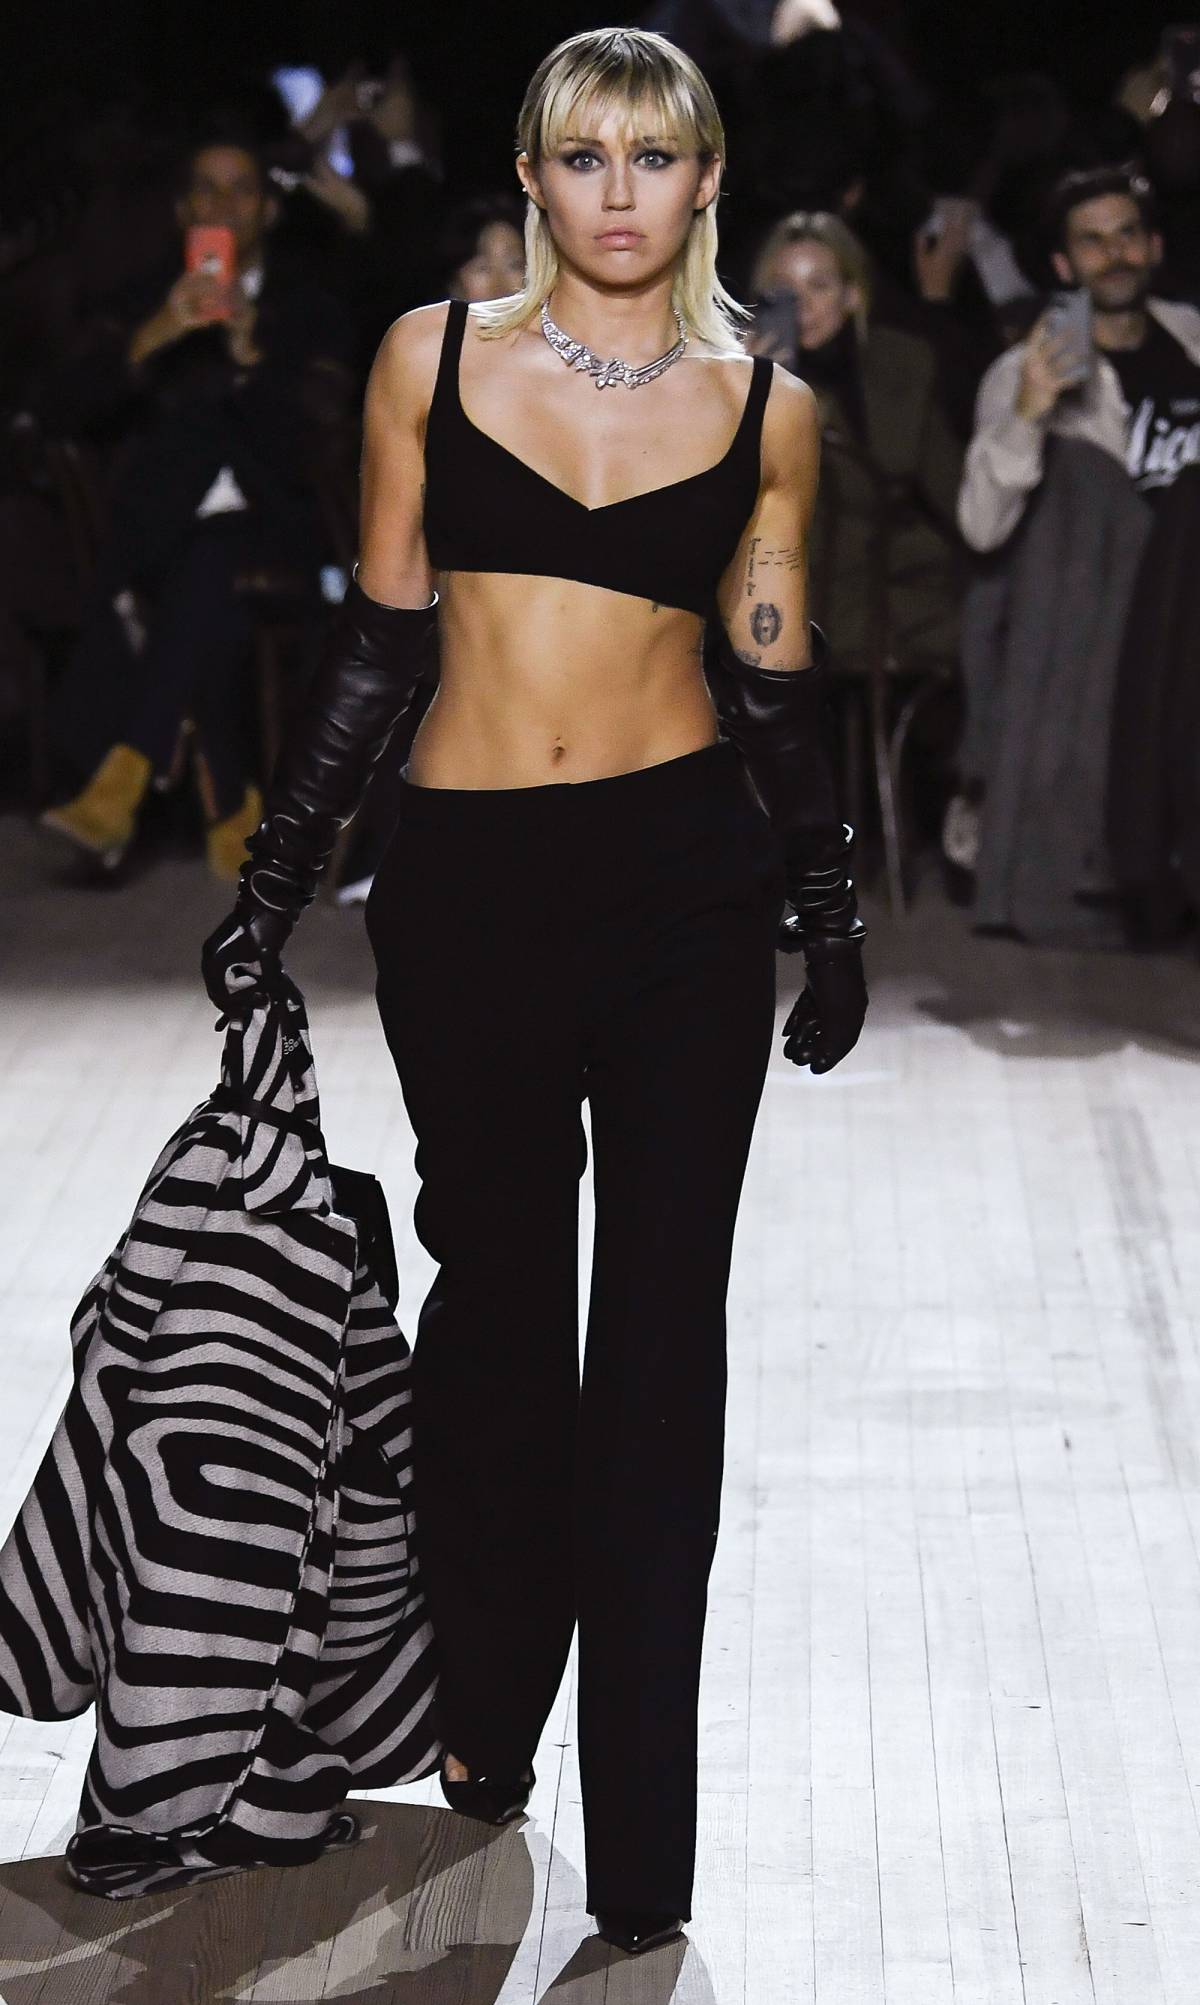 February 12, 2020 - Bella Hadid Closes New York Fashion Week In